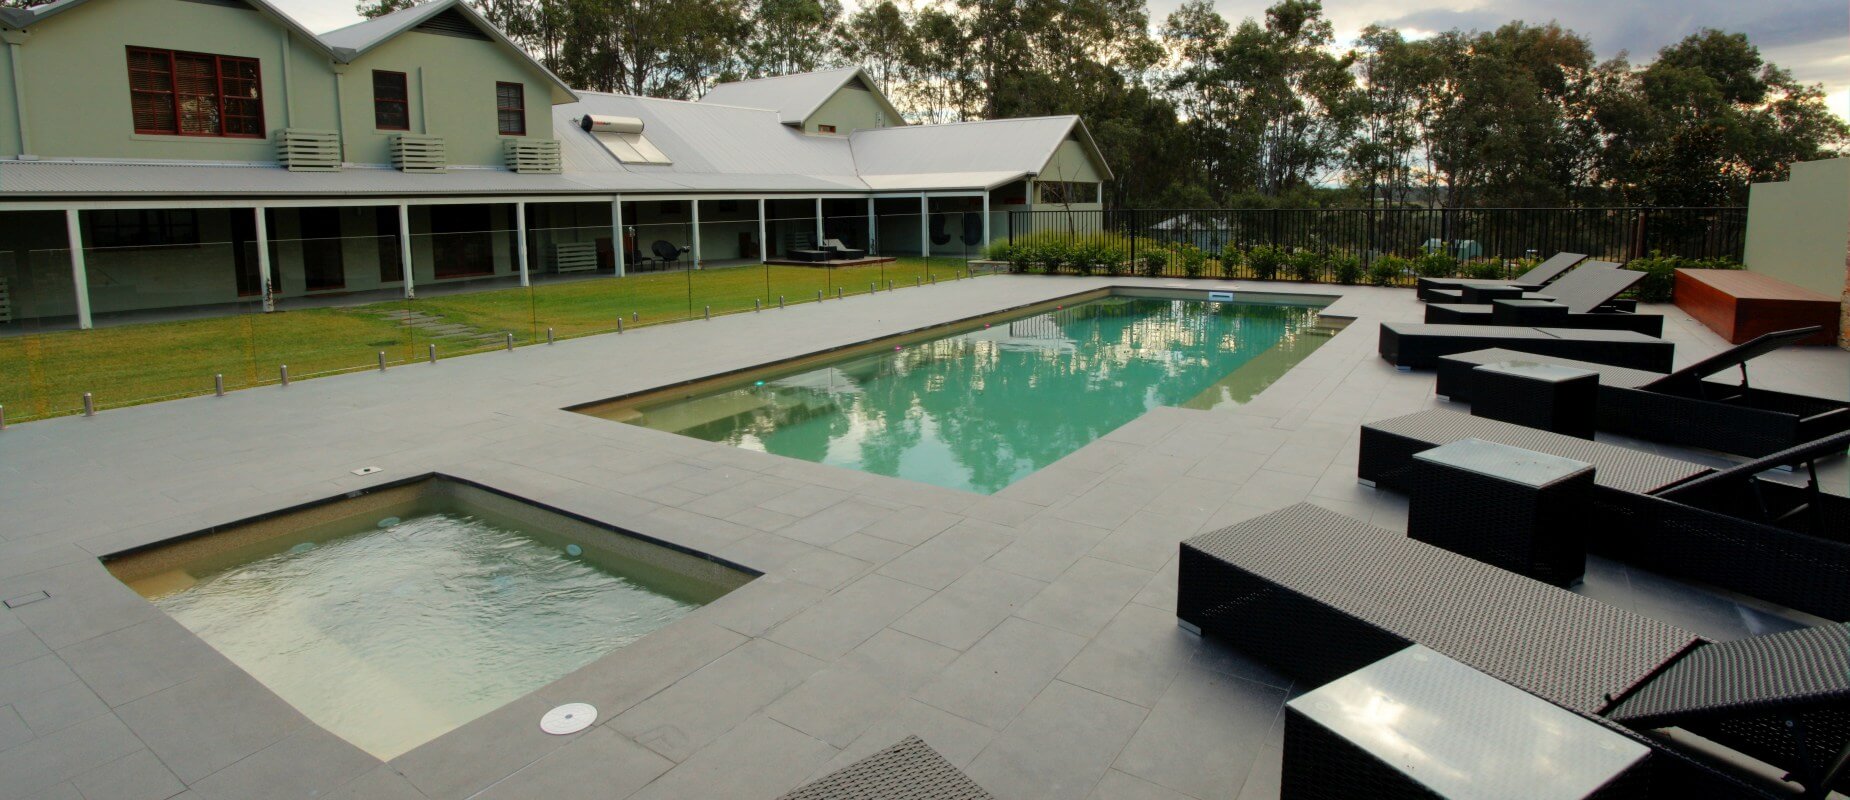 013-Compass-Pools-Australia_Pool-and-spa-combination-with-Vogue-fibreglass-pool